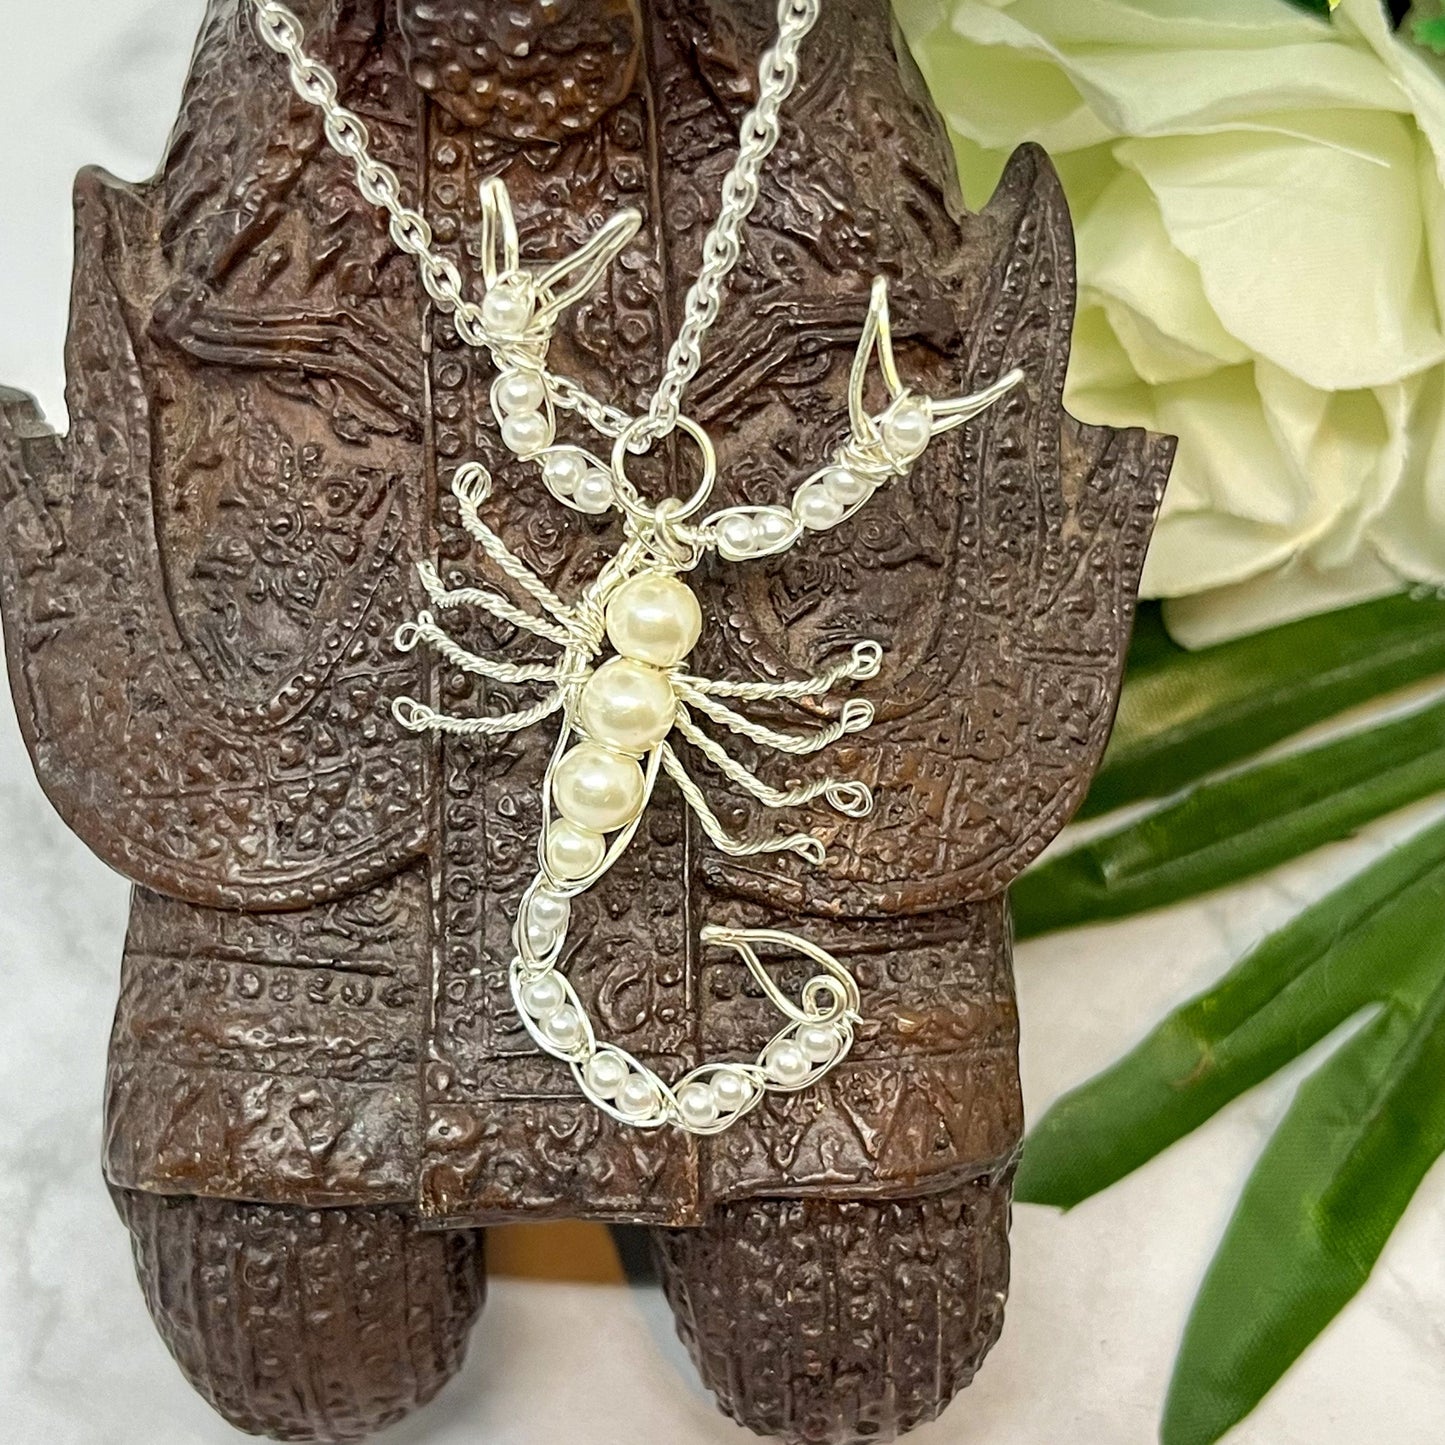 Unusual Scorpion Gift | Unique Scorpion Gift